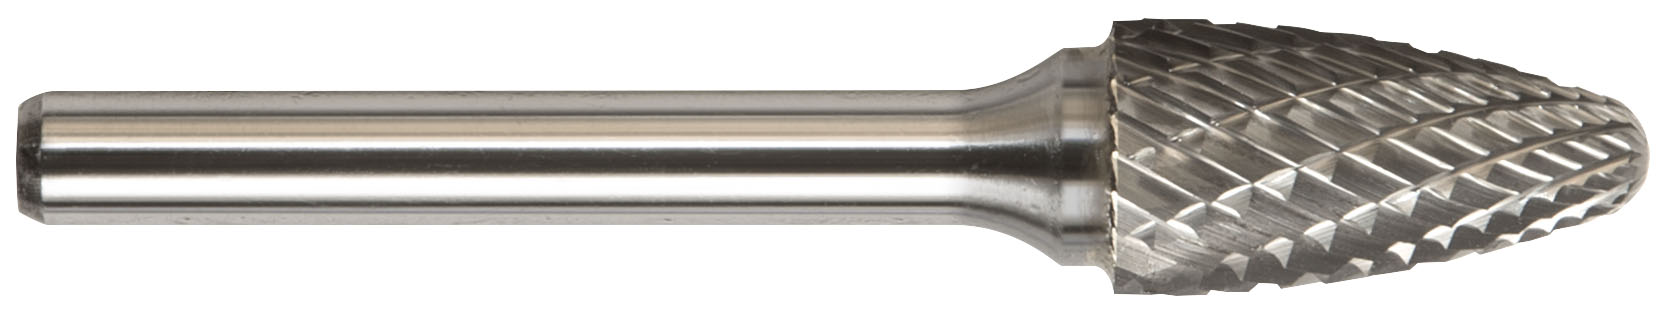 Single-Cut 1/4 x 3/8 x 3/16 SK-3 90 degree Cone Dedeco 13105 Carbide Bur 